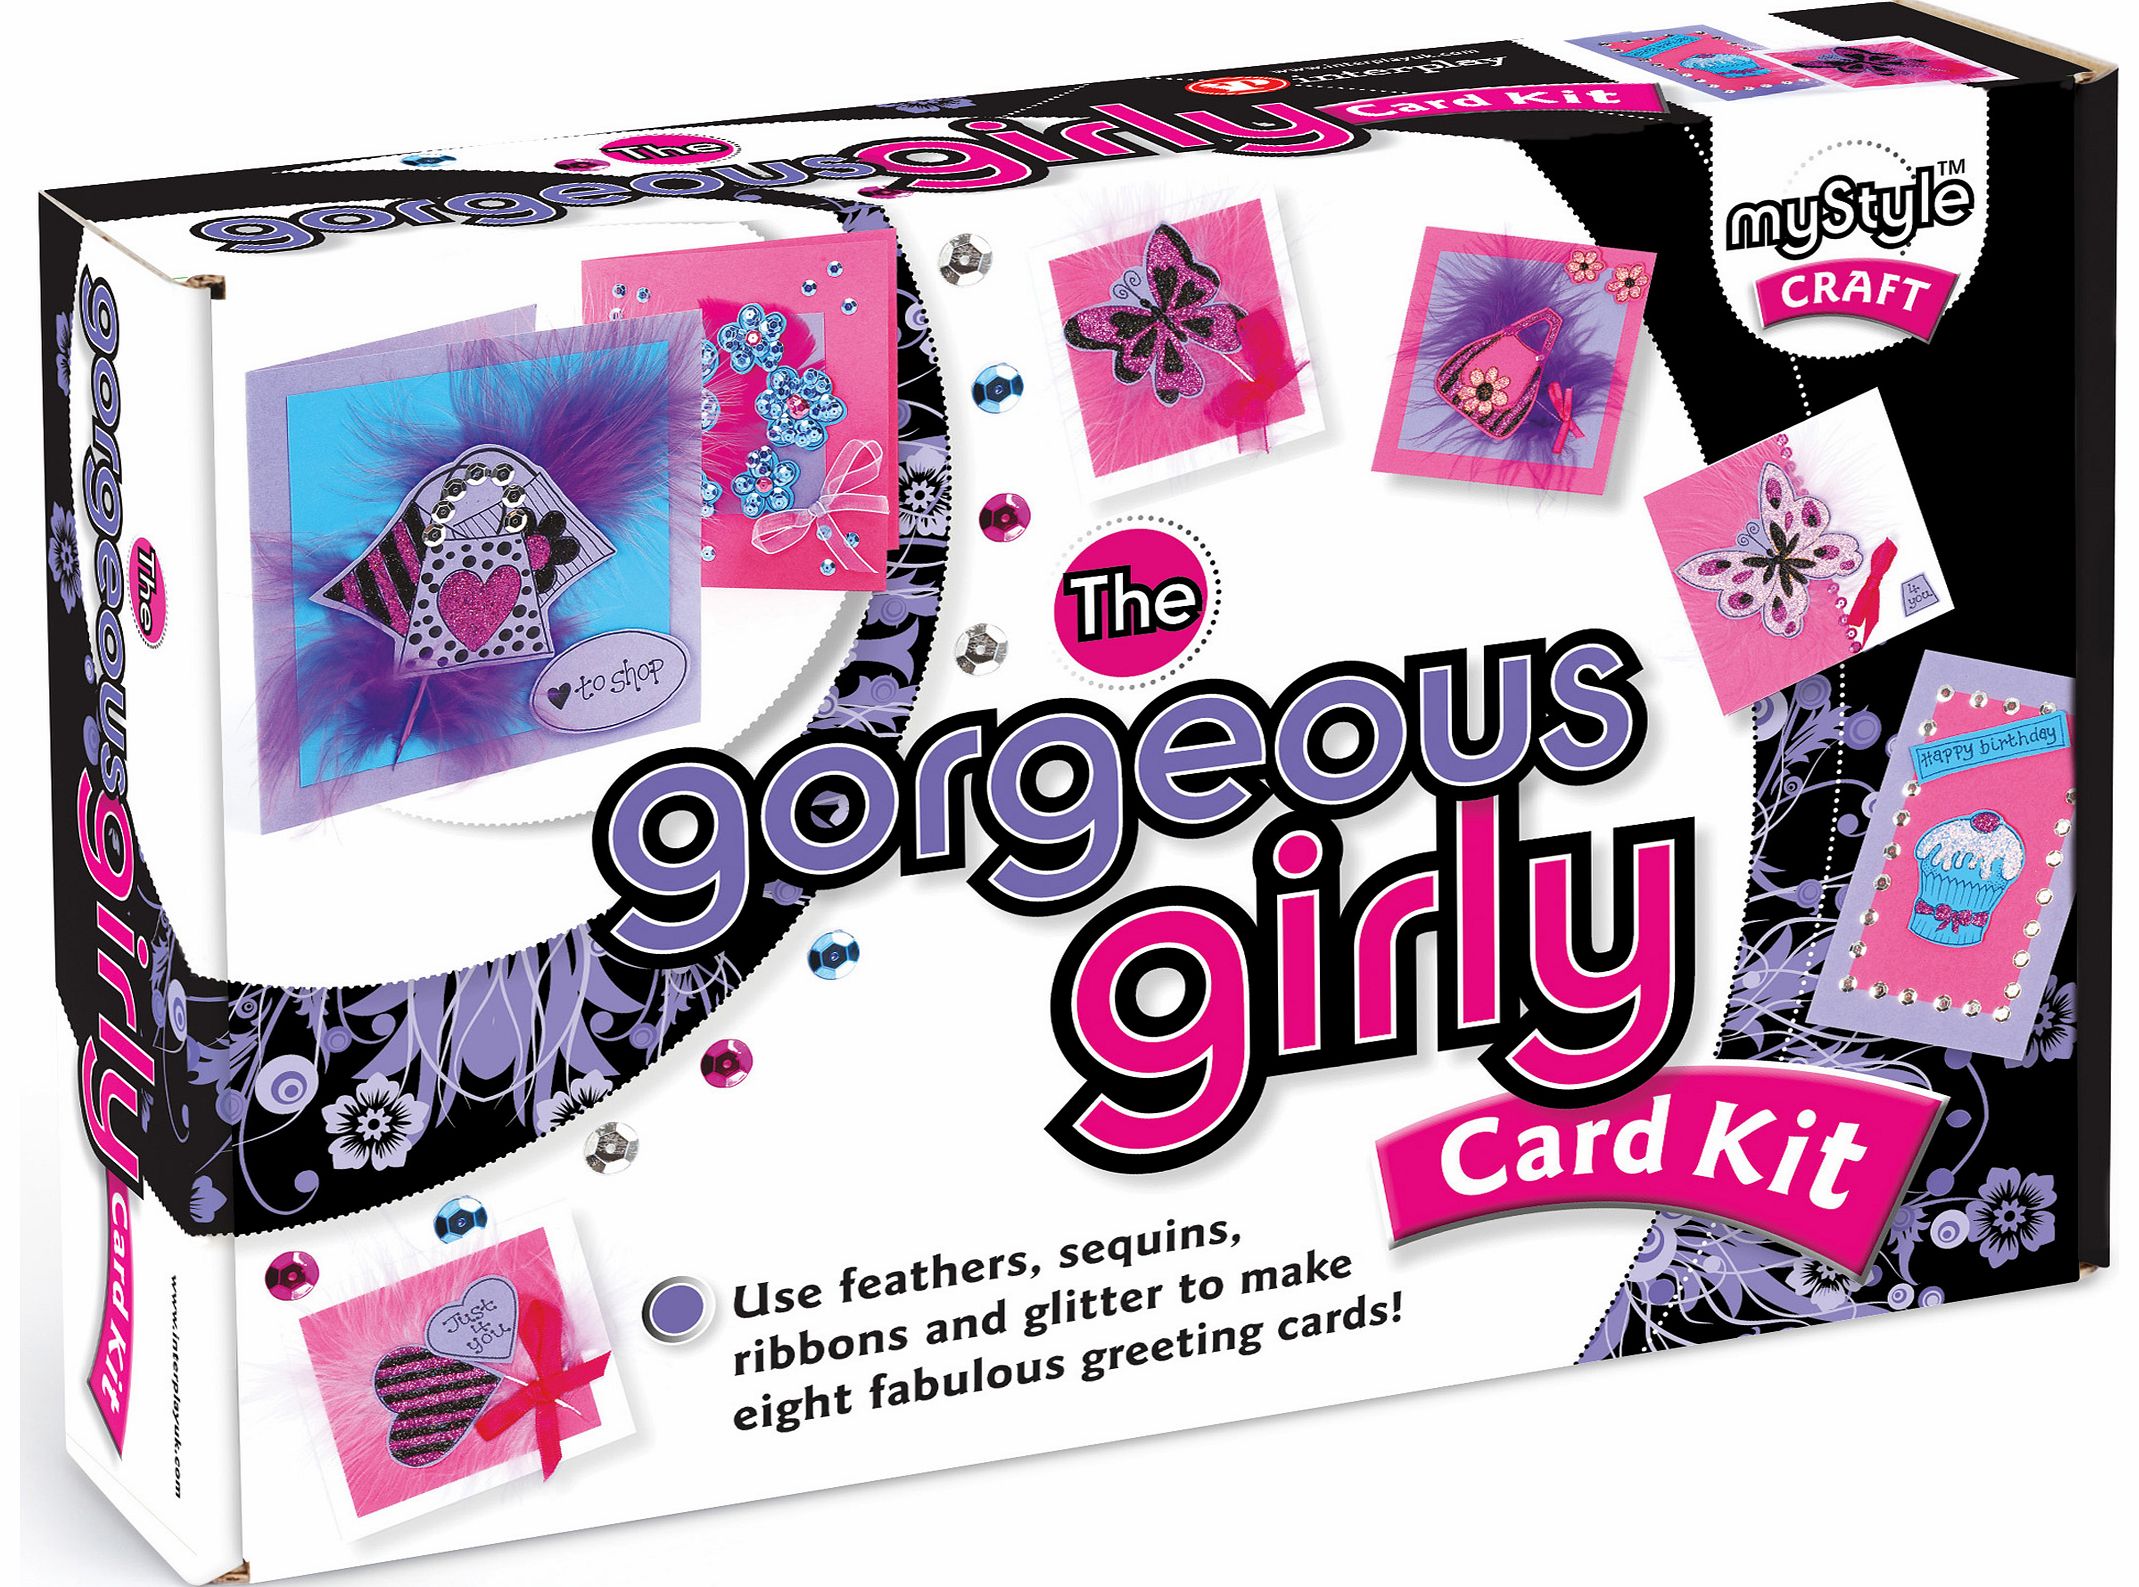 Gorgeous Girly Card Kit